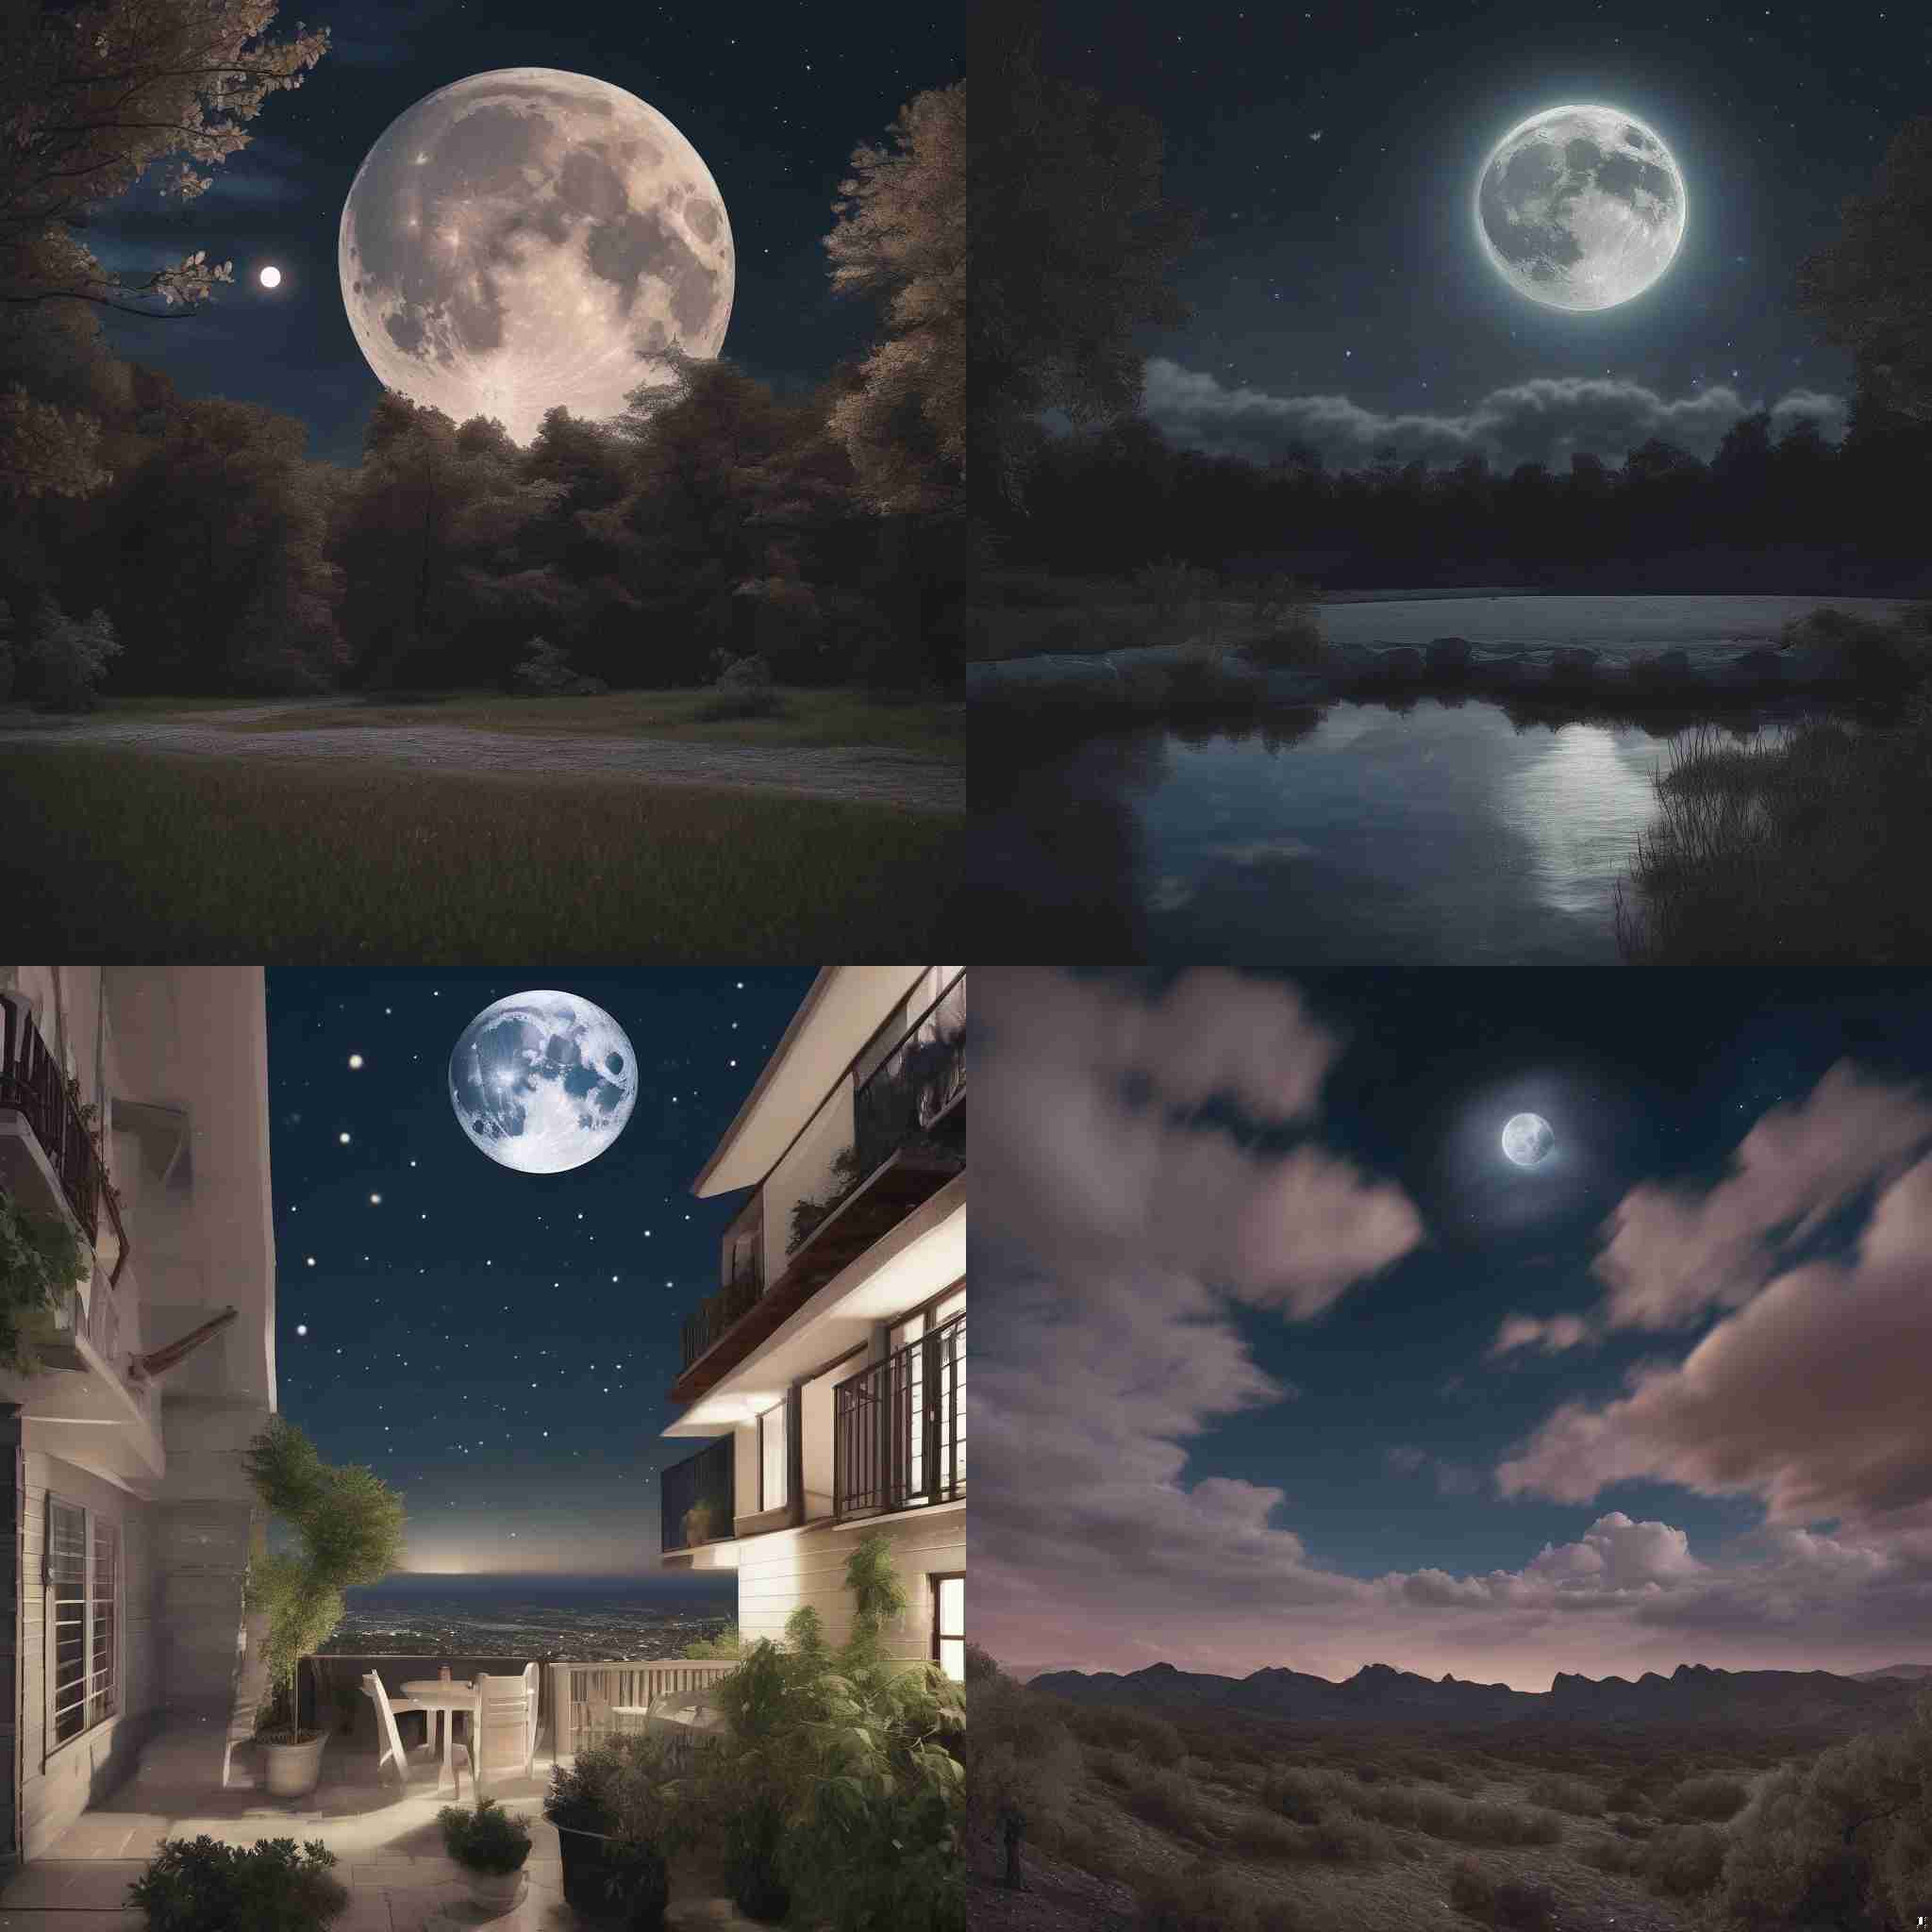 A night sky on a full moon night